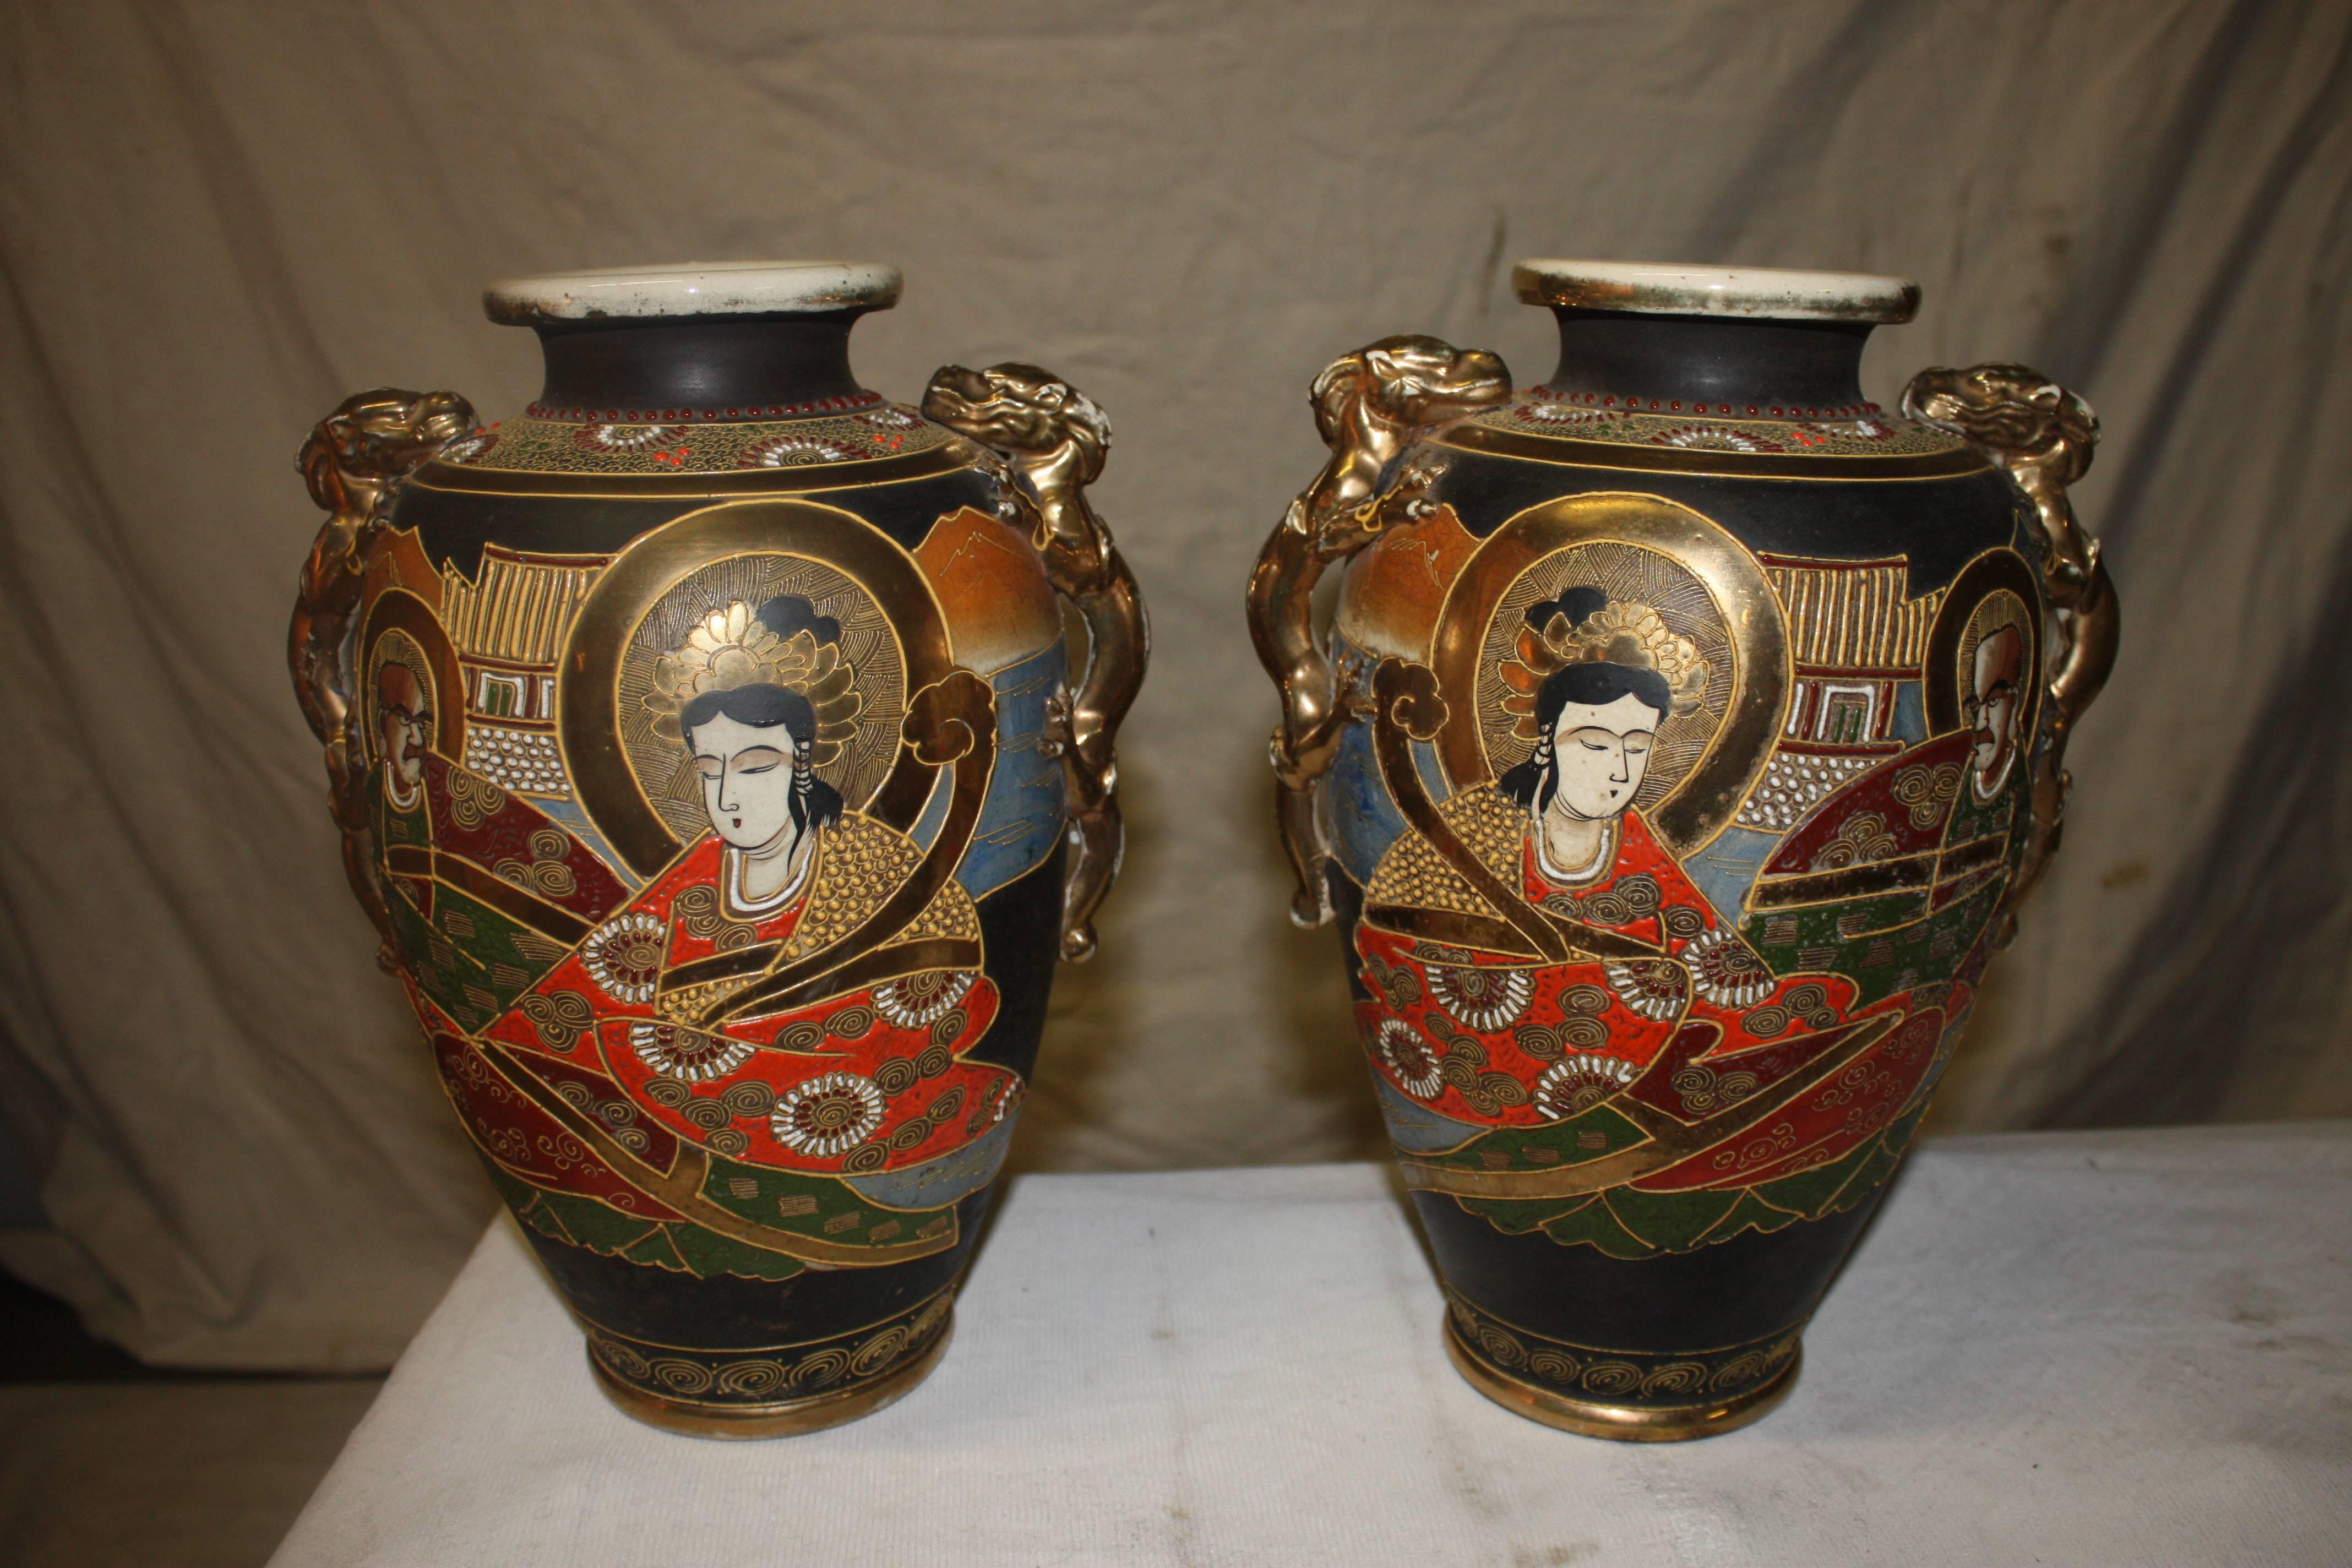 Pair of 19th century Satsuma vases, Japan 19th century.